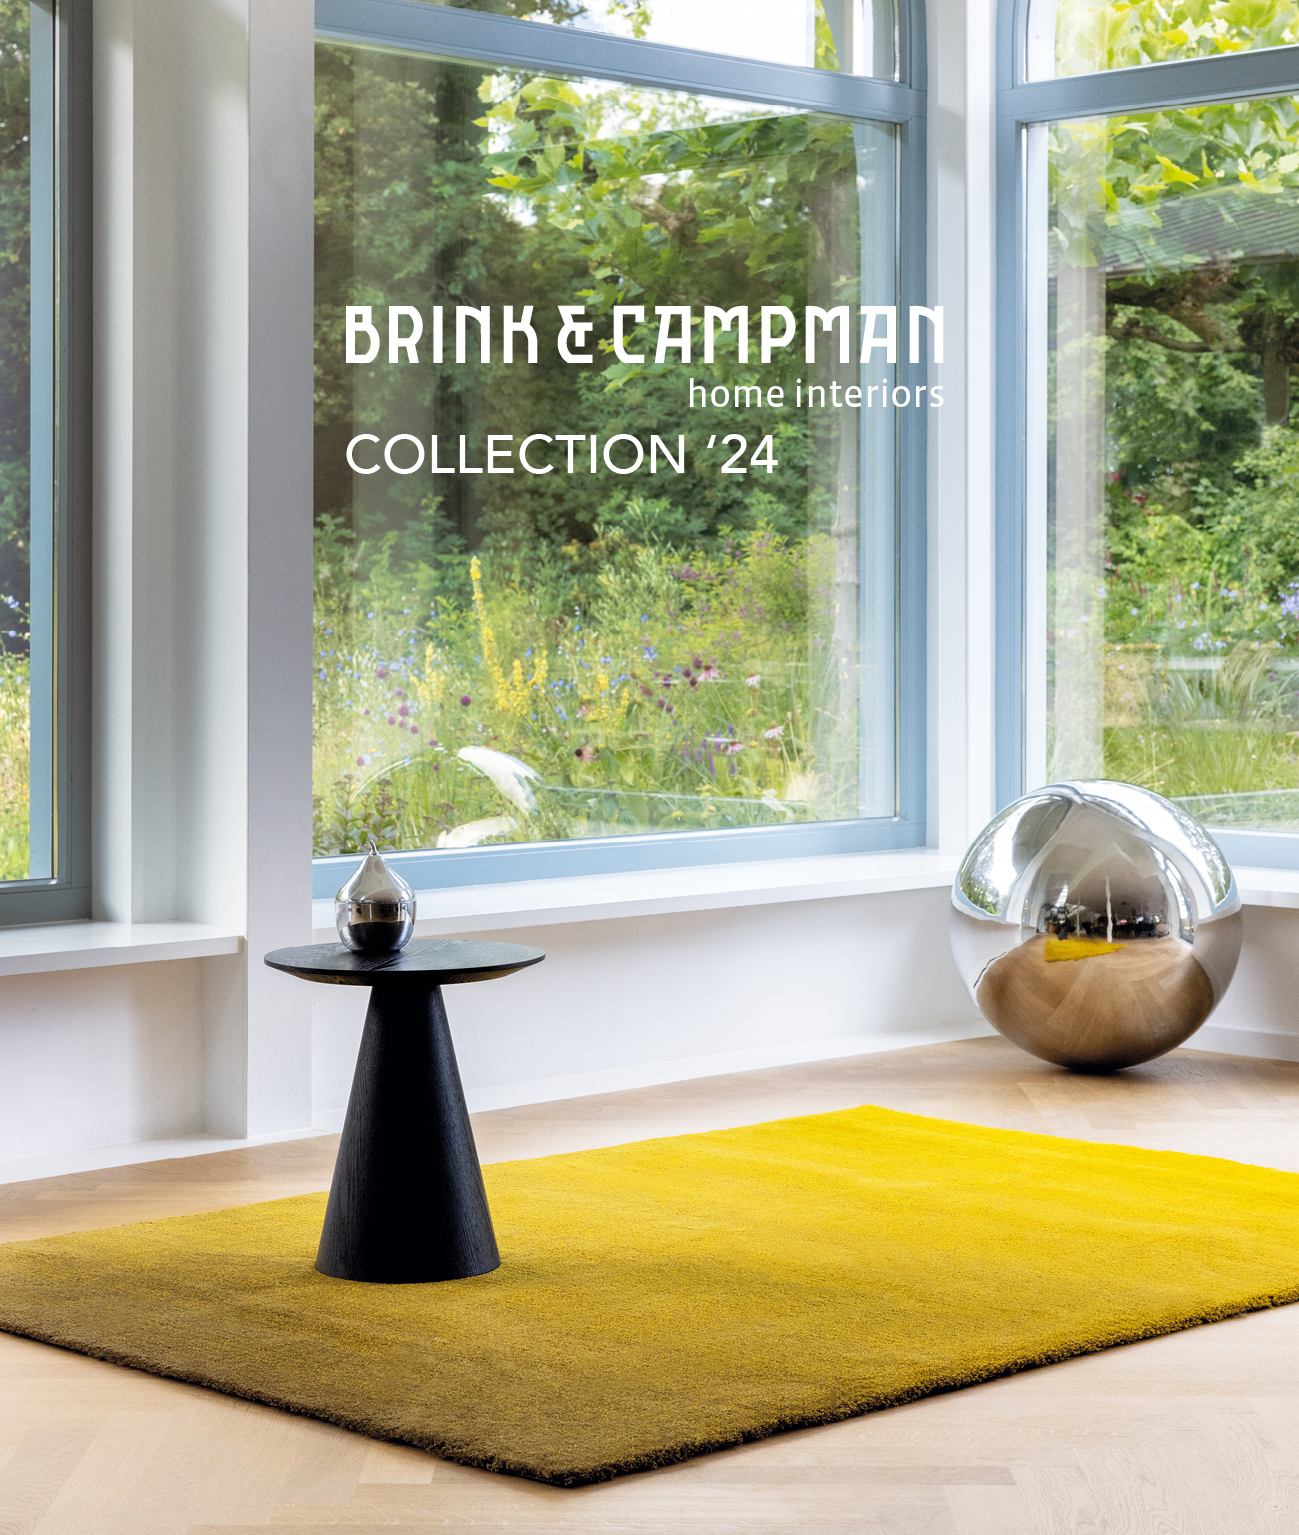 Brink & Campman collection 2023